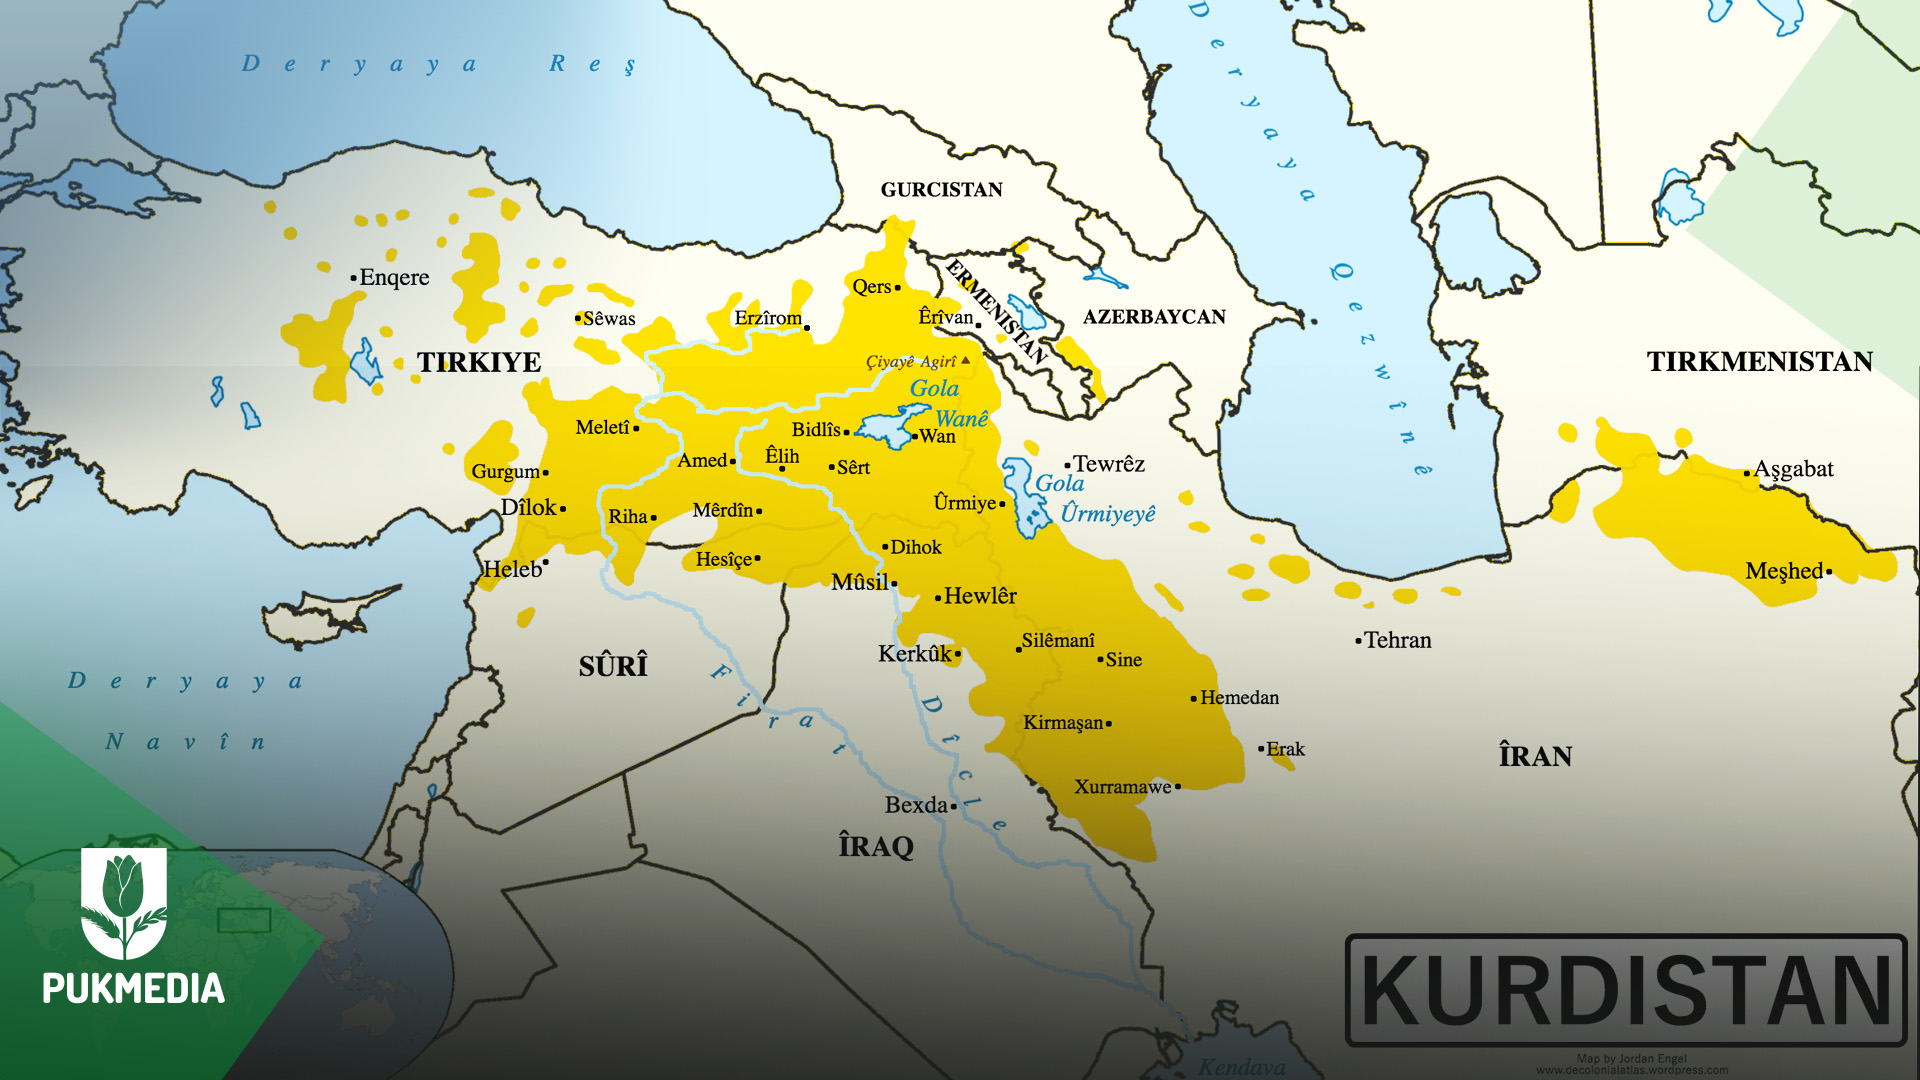  Iraq, Turkey, Iran, and Syria on the map.